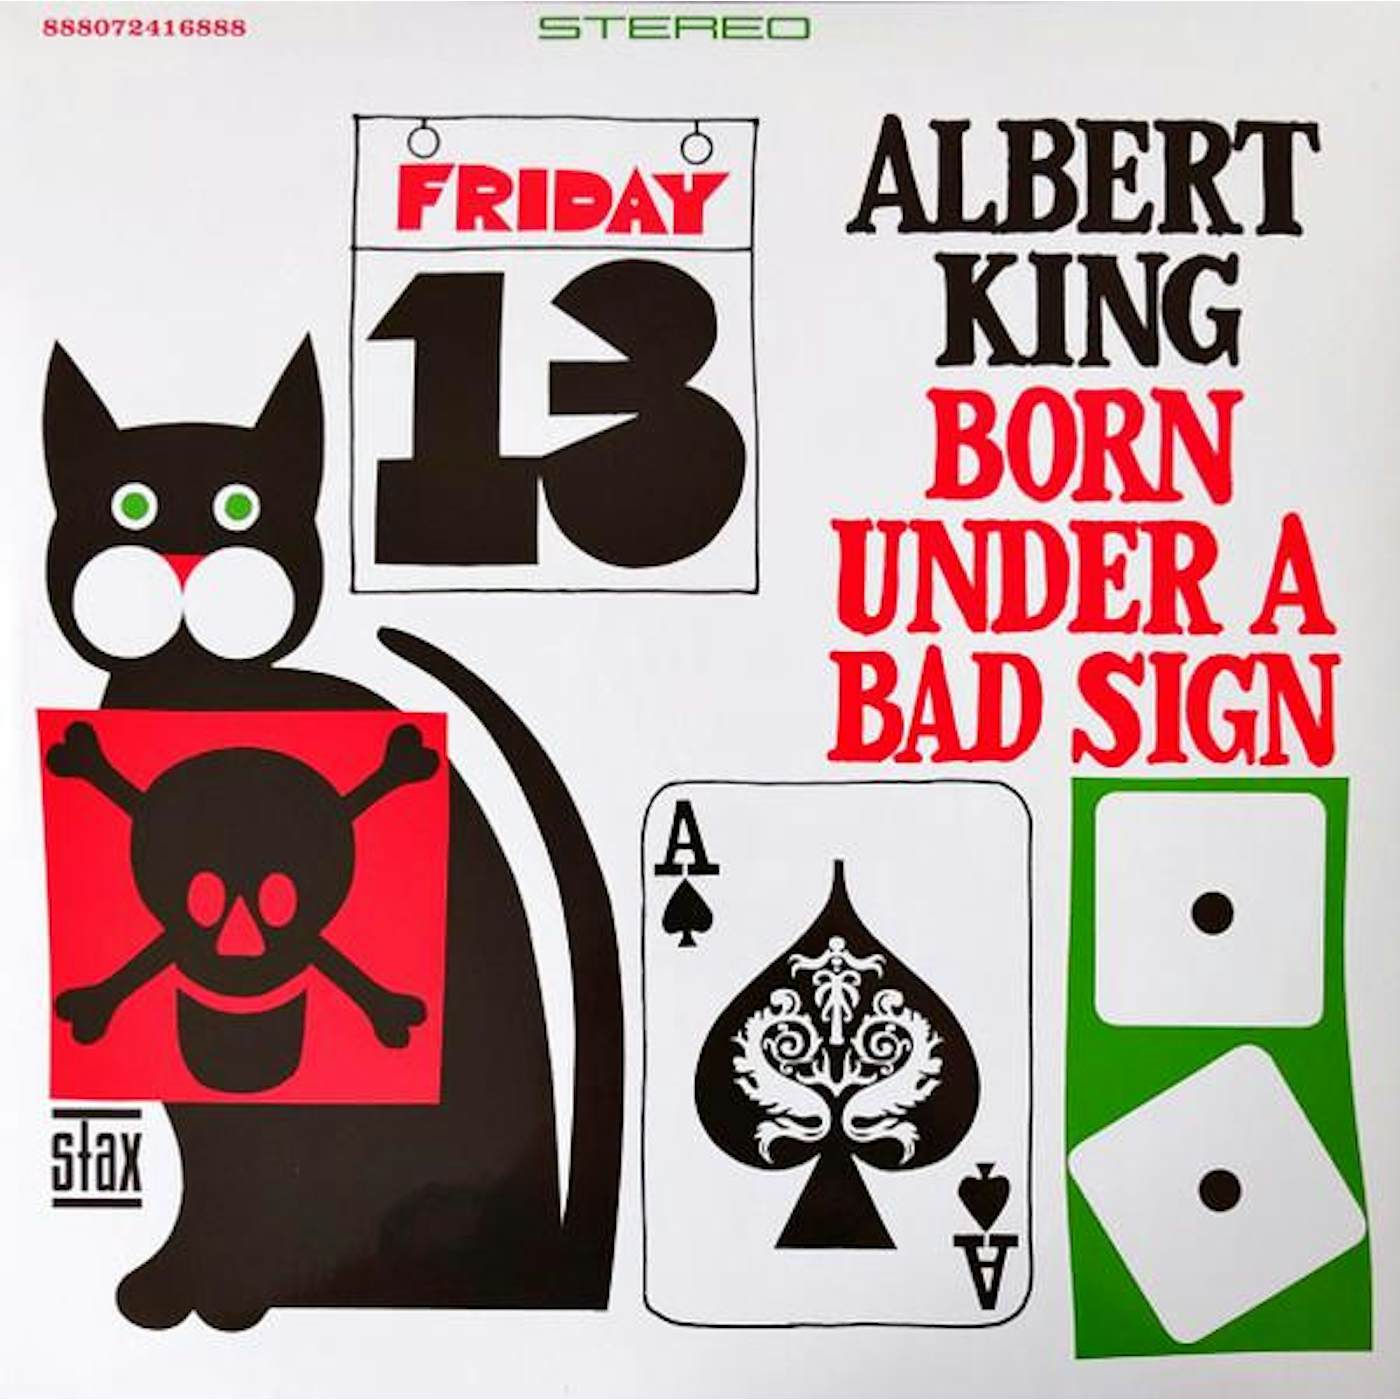 Albert King BORN UNDER A BAD SIGN Vinyl Record